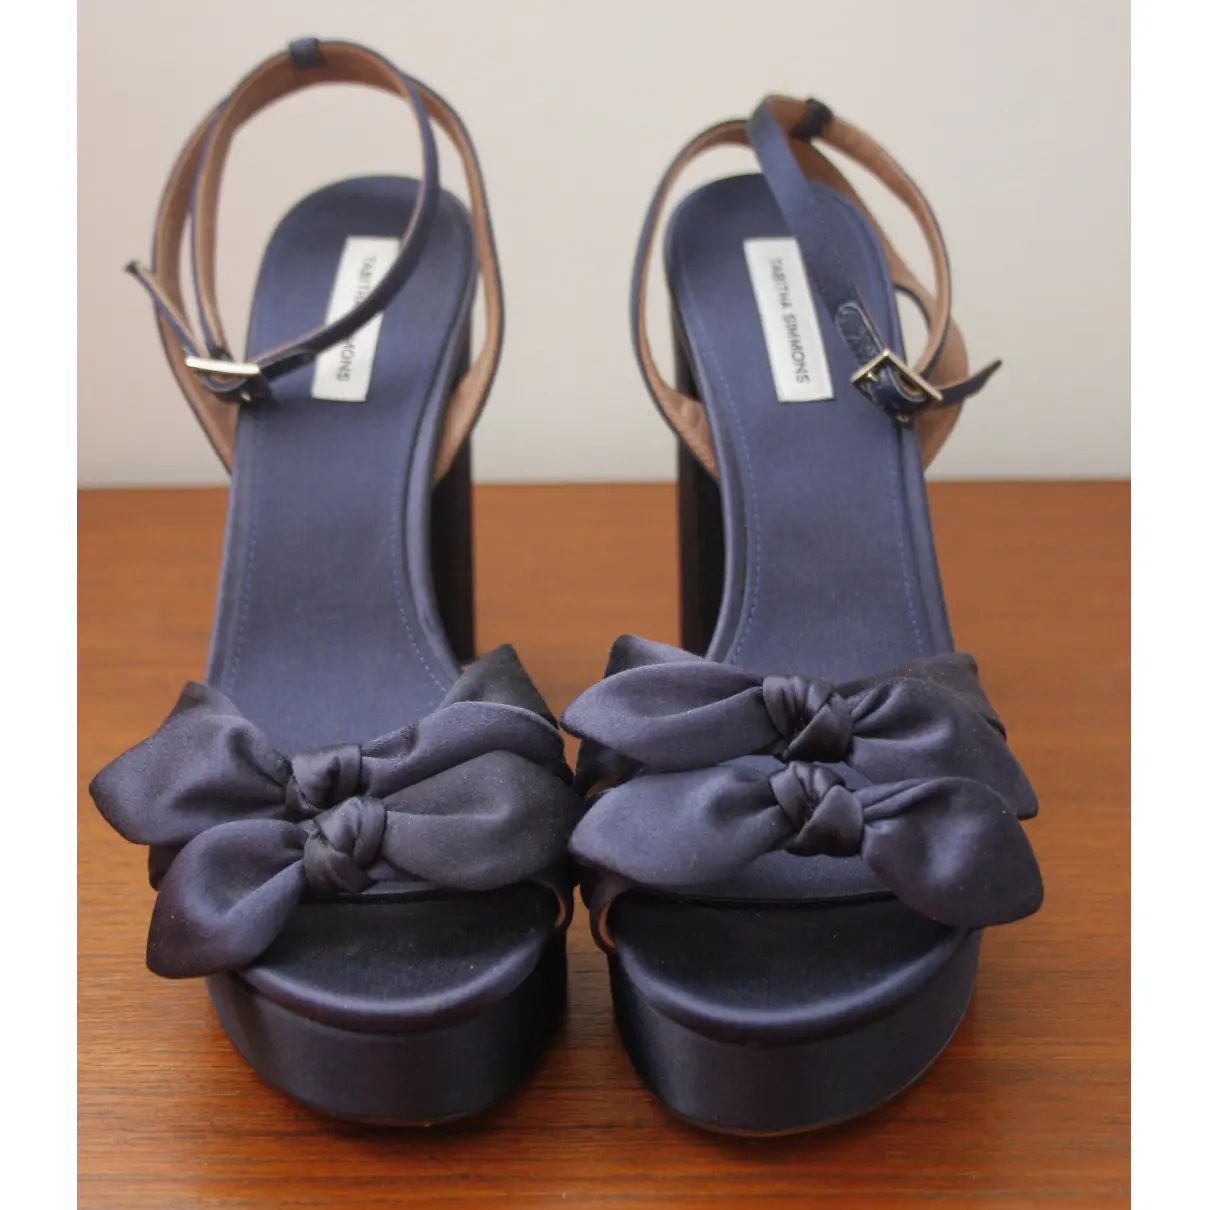 Leather heels Tabitha Simmons